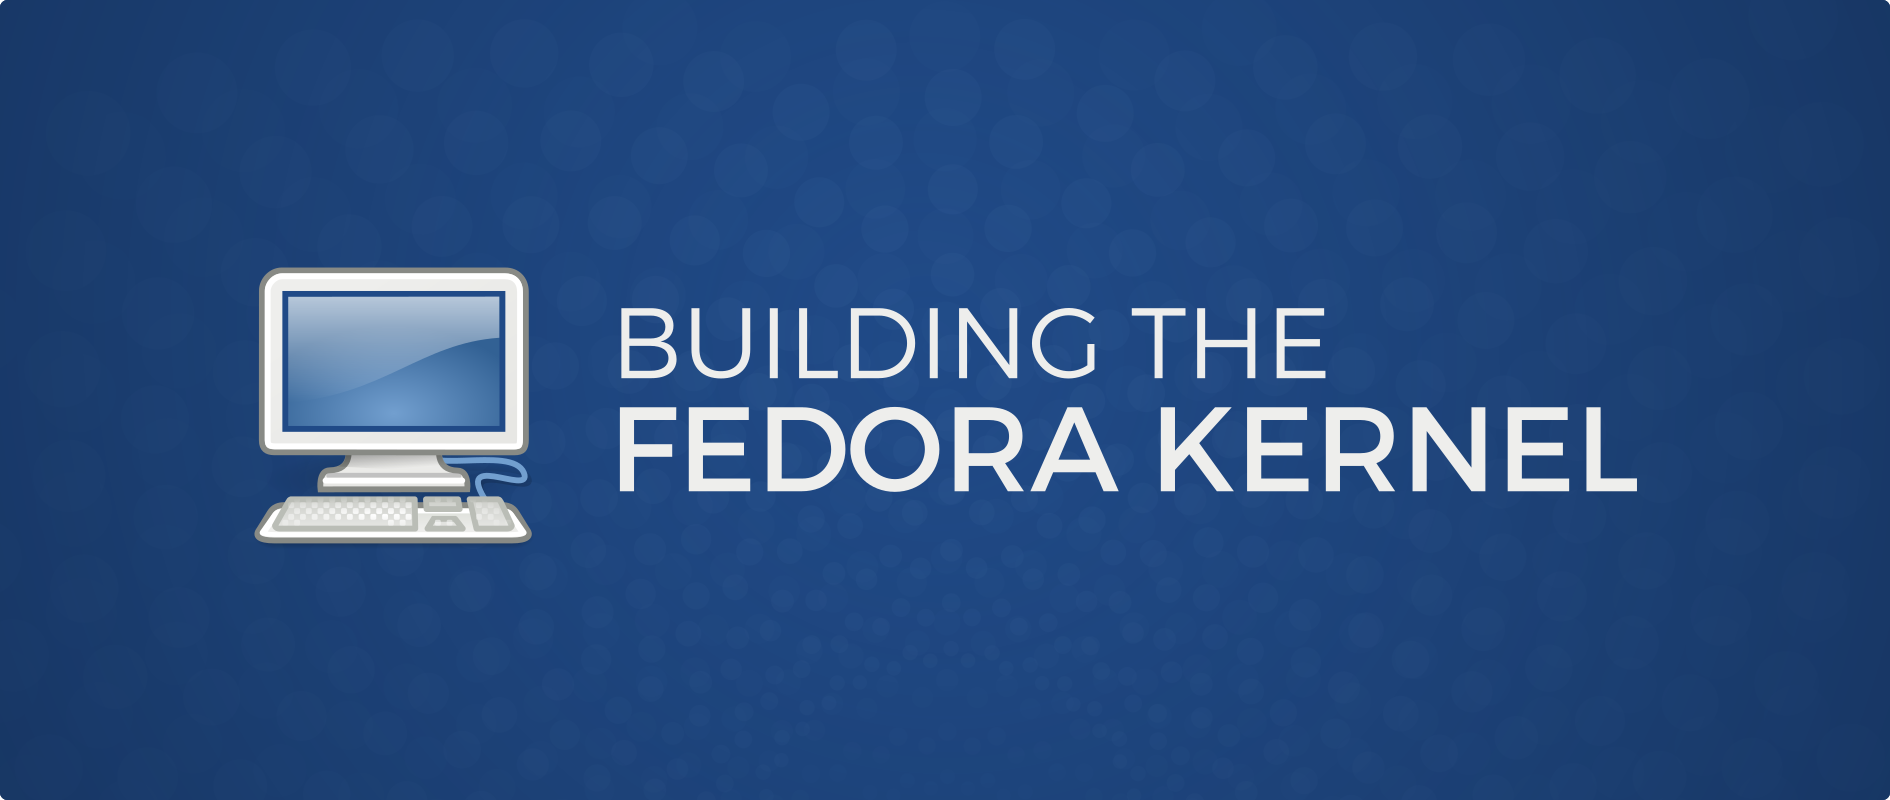 Building the Fedora Kernel